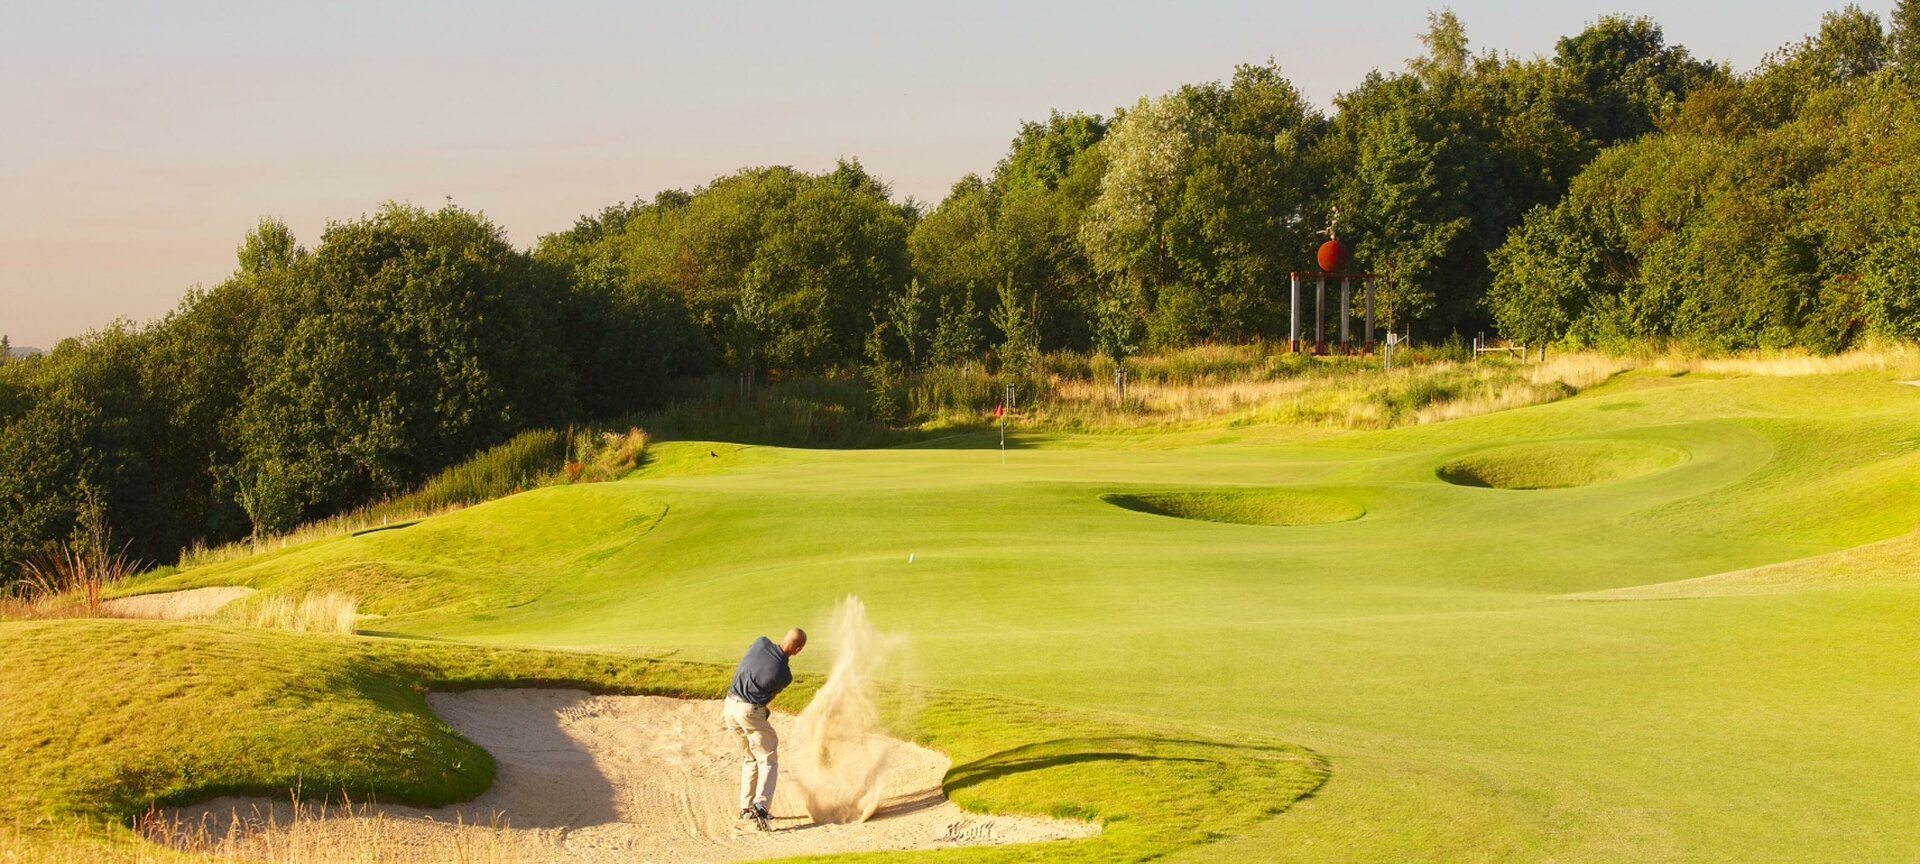 Golfclub Lanaken - Championship Course hole 18